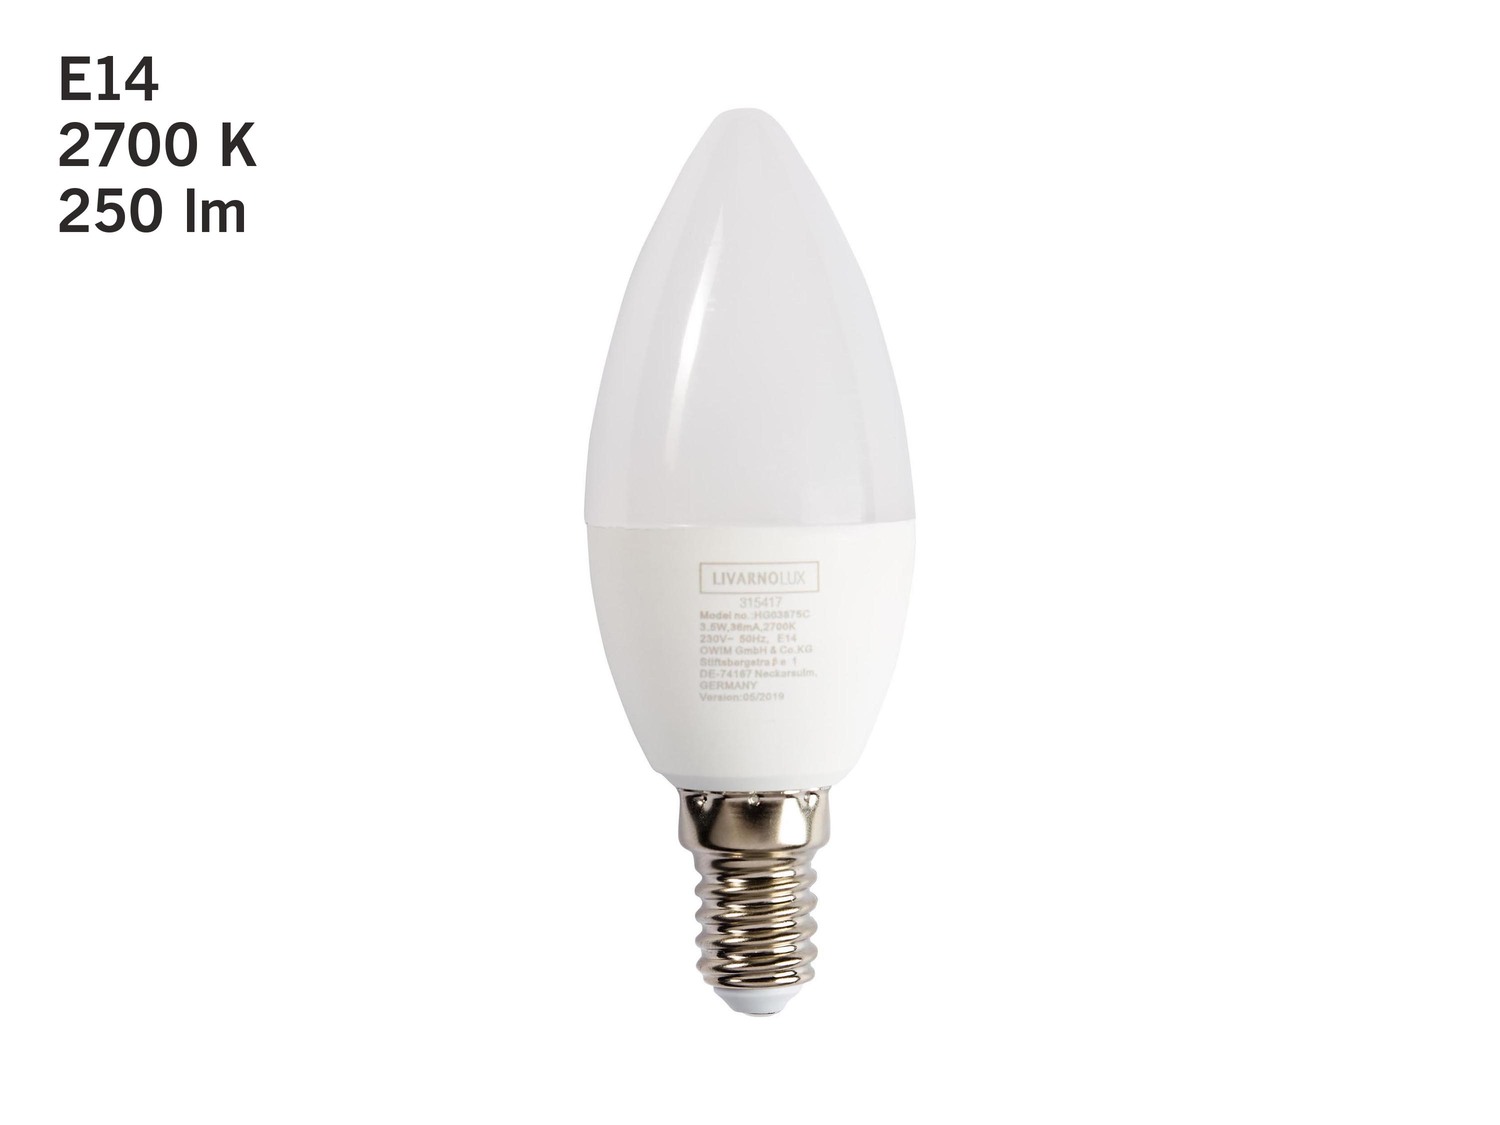 Lampadina LED 3,5 W Livarno Lux, prezzo 1.99 &#8364;  
Bianco caldo